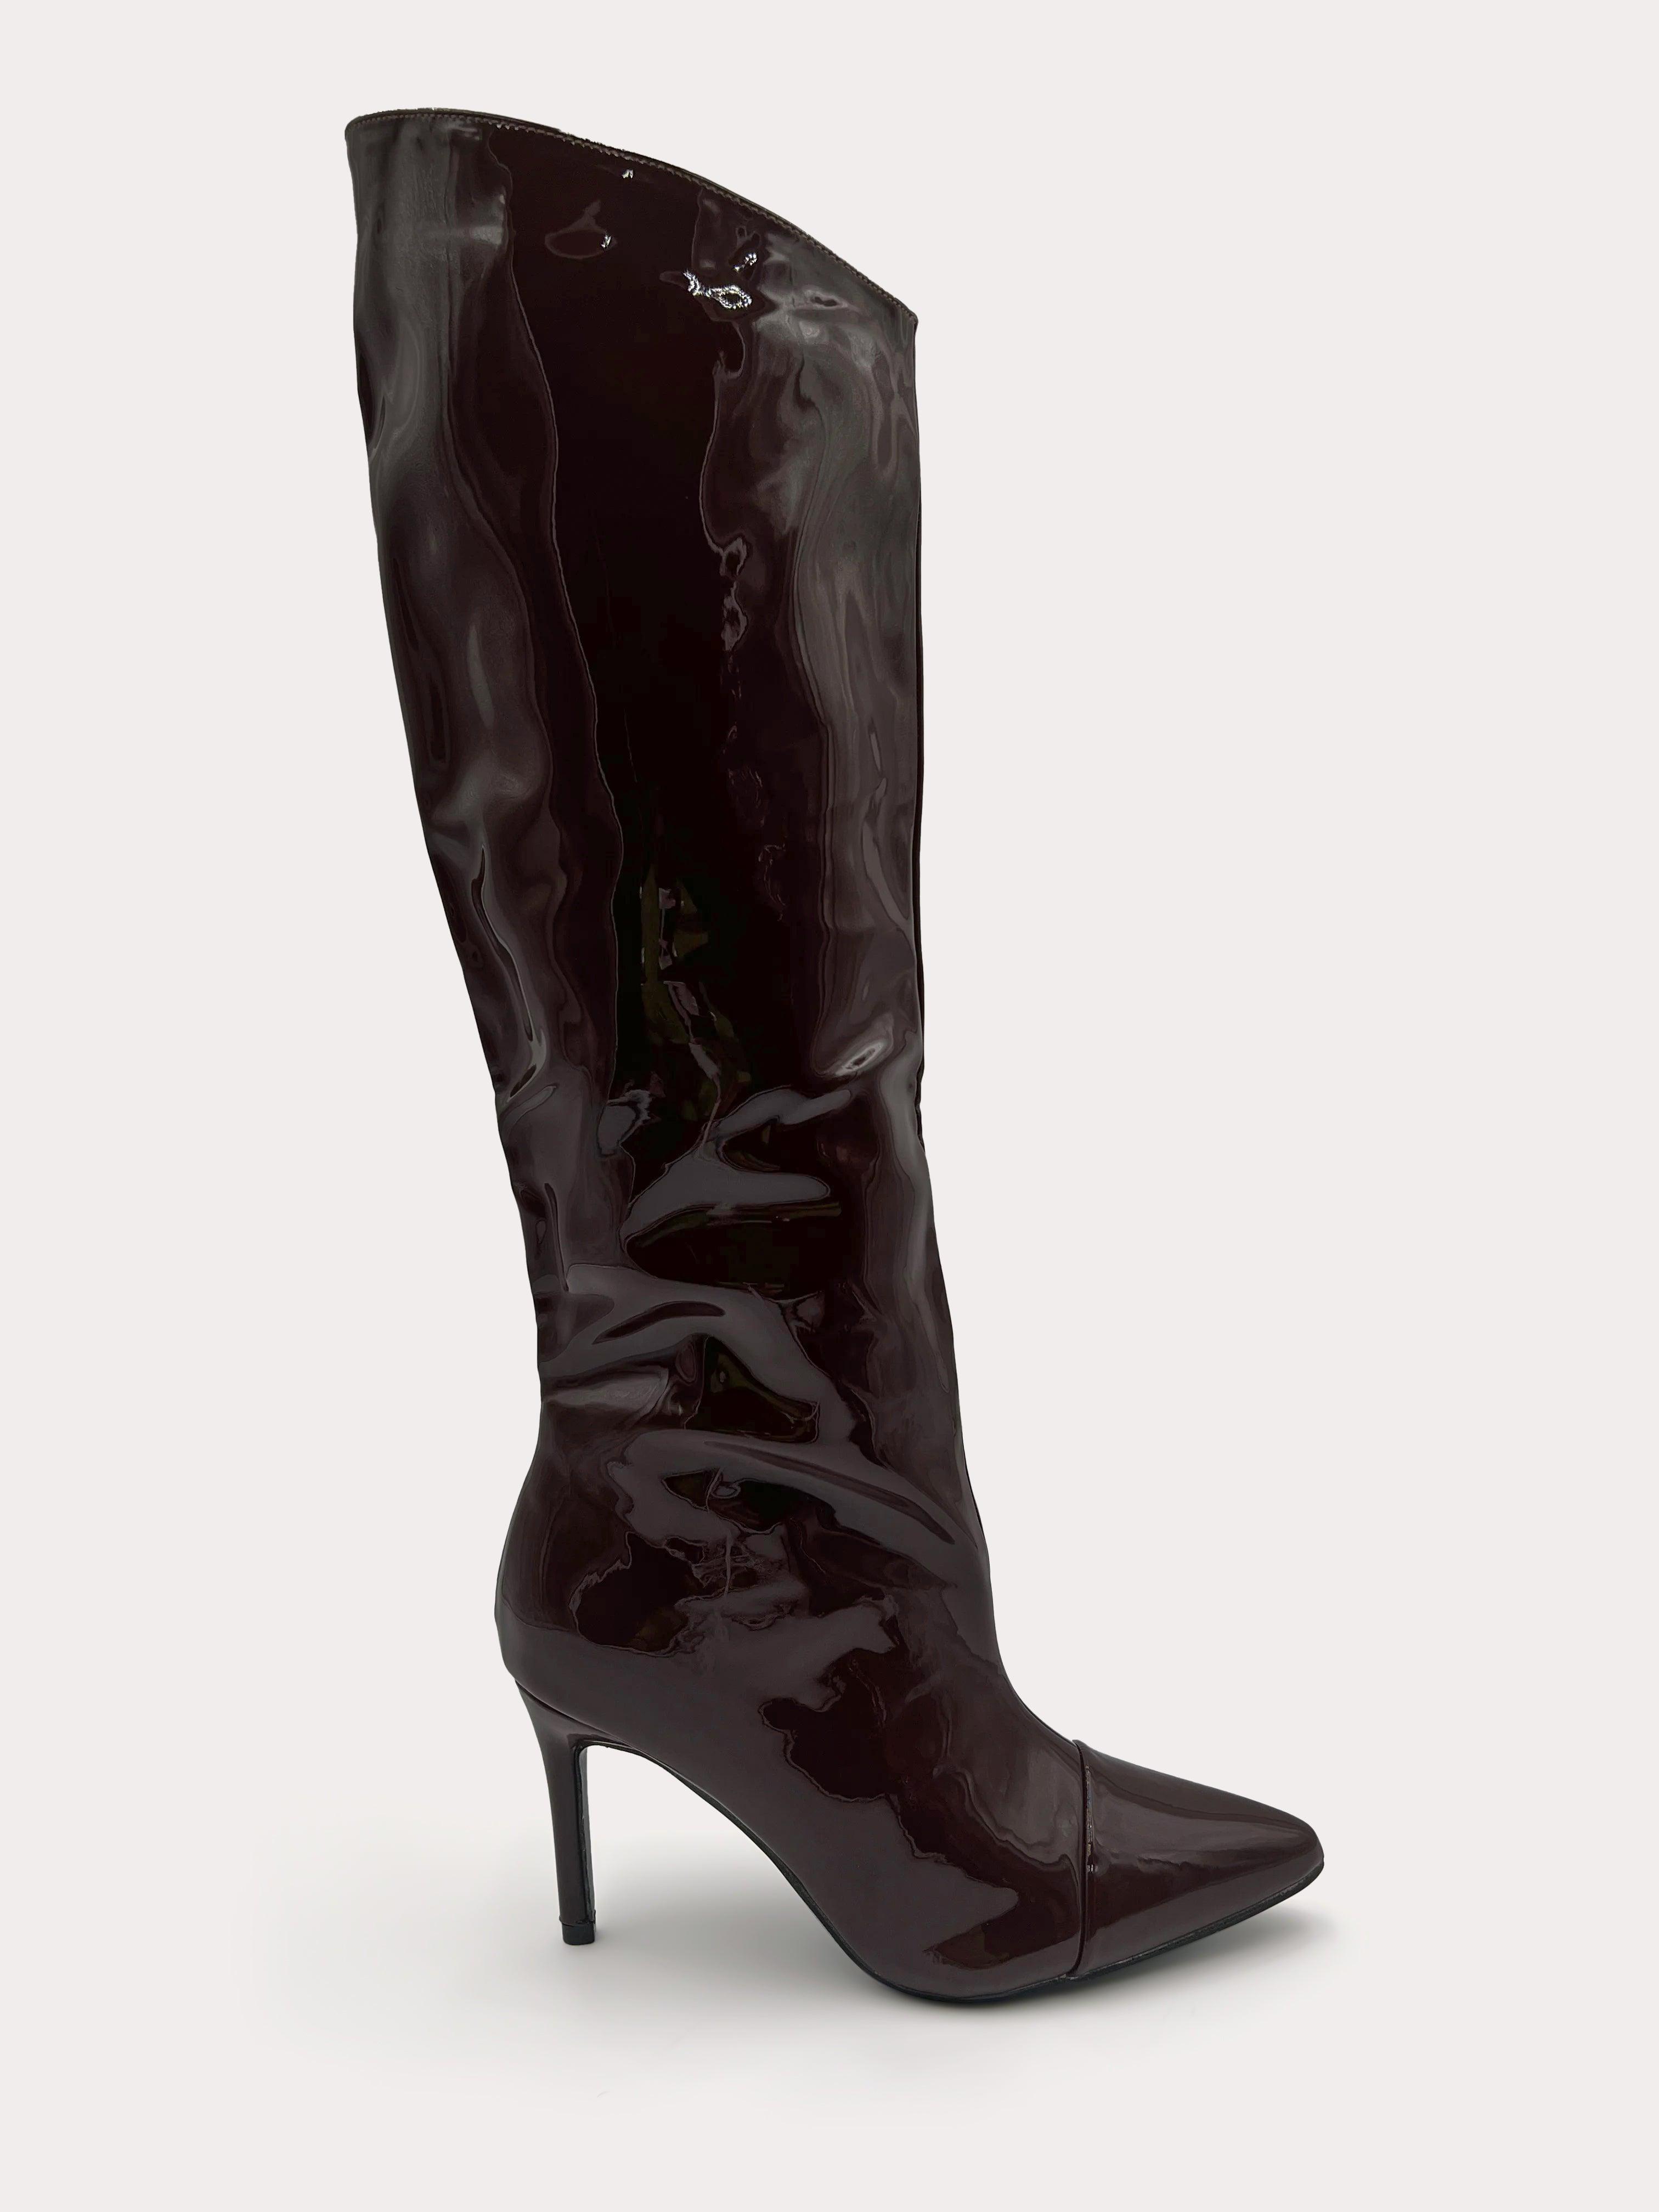 Alyssa - Shiny brown boot with stiletto heel - IQUONIQUE